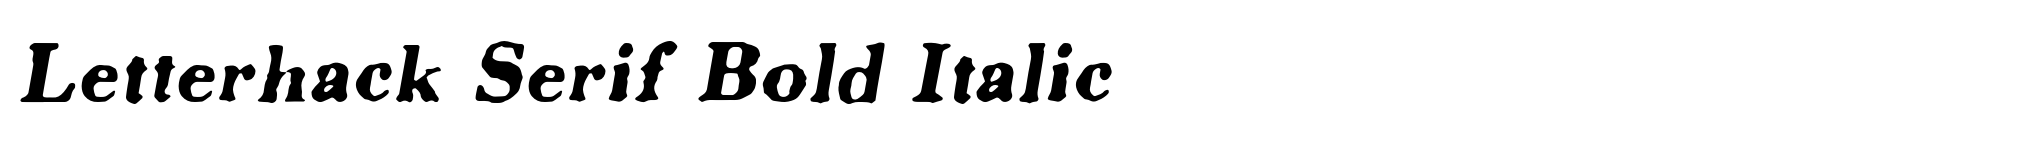 Letterhack Serif Bold Italic image